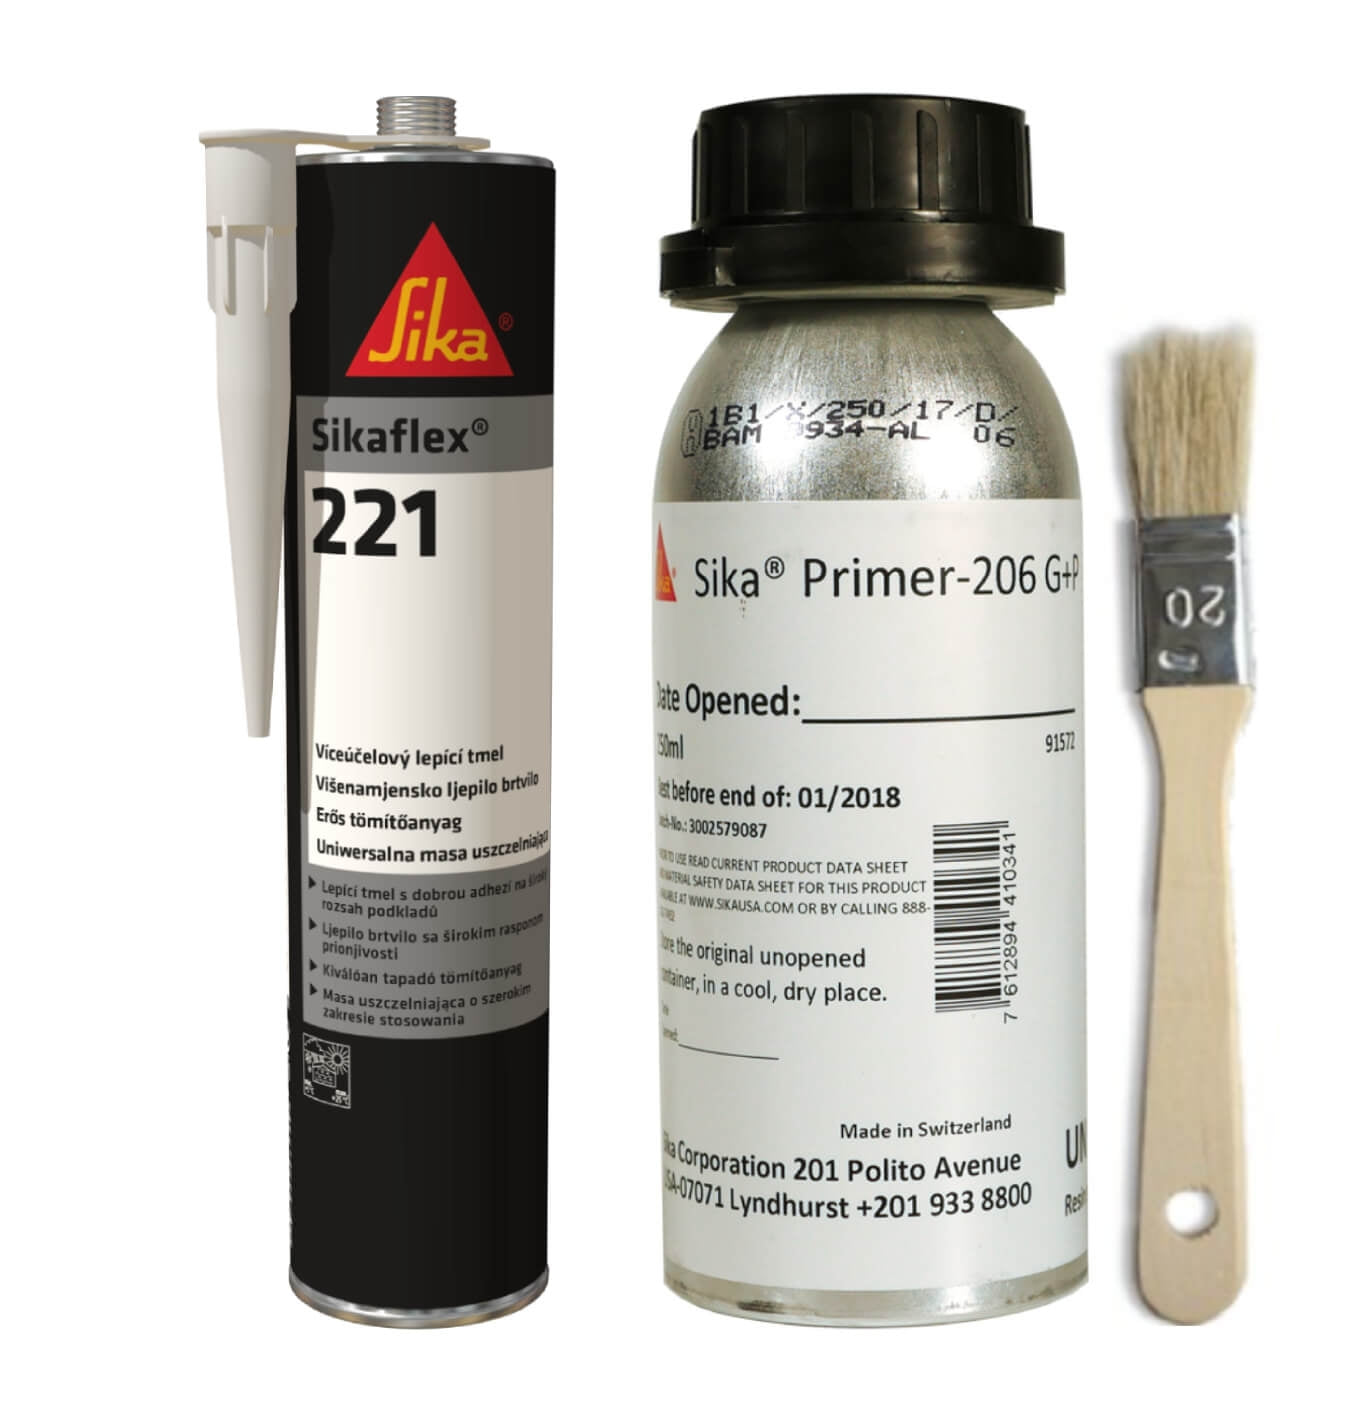 Sikaflex 221 White Multi Purpose Adhesive Sealant & Primer 206 Bundle